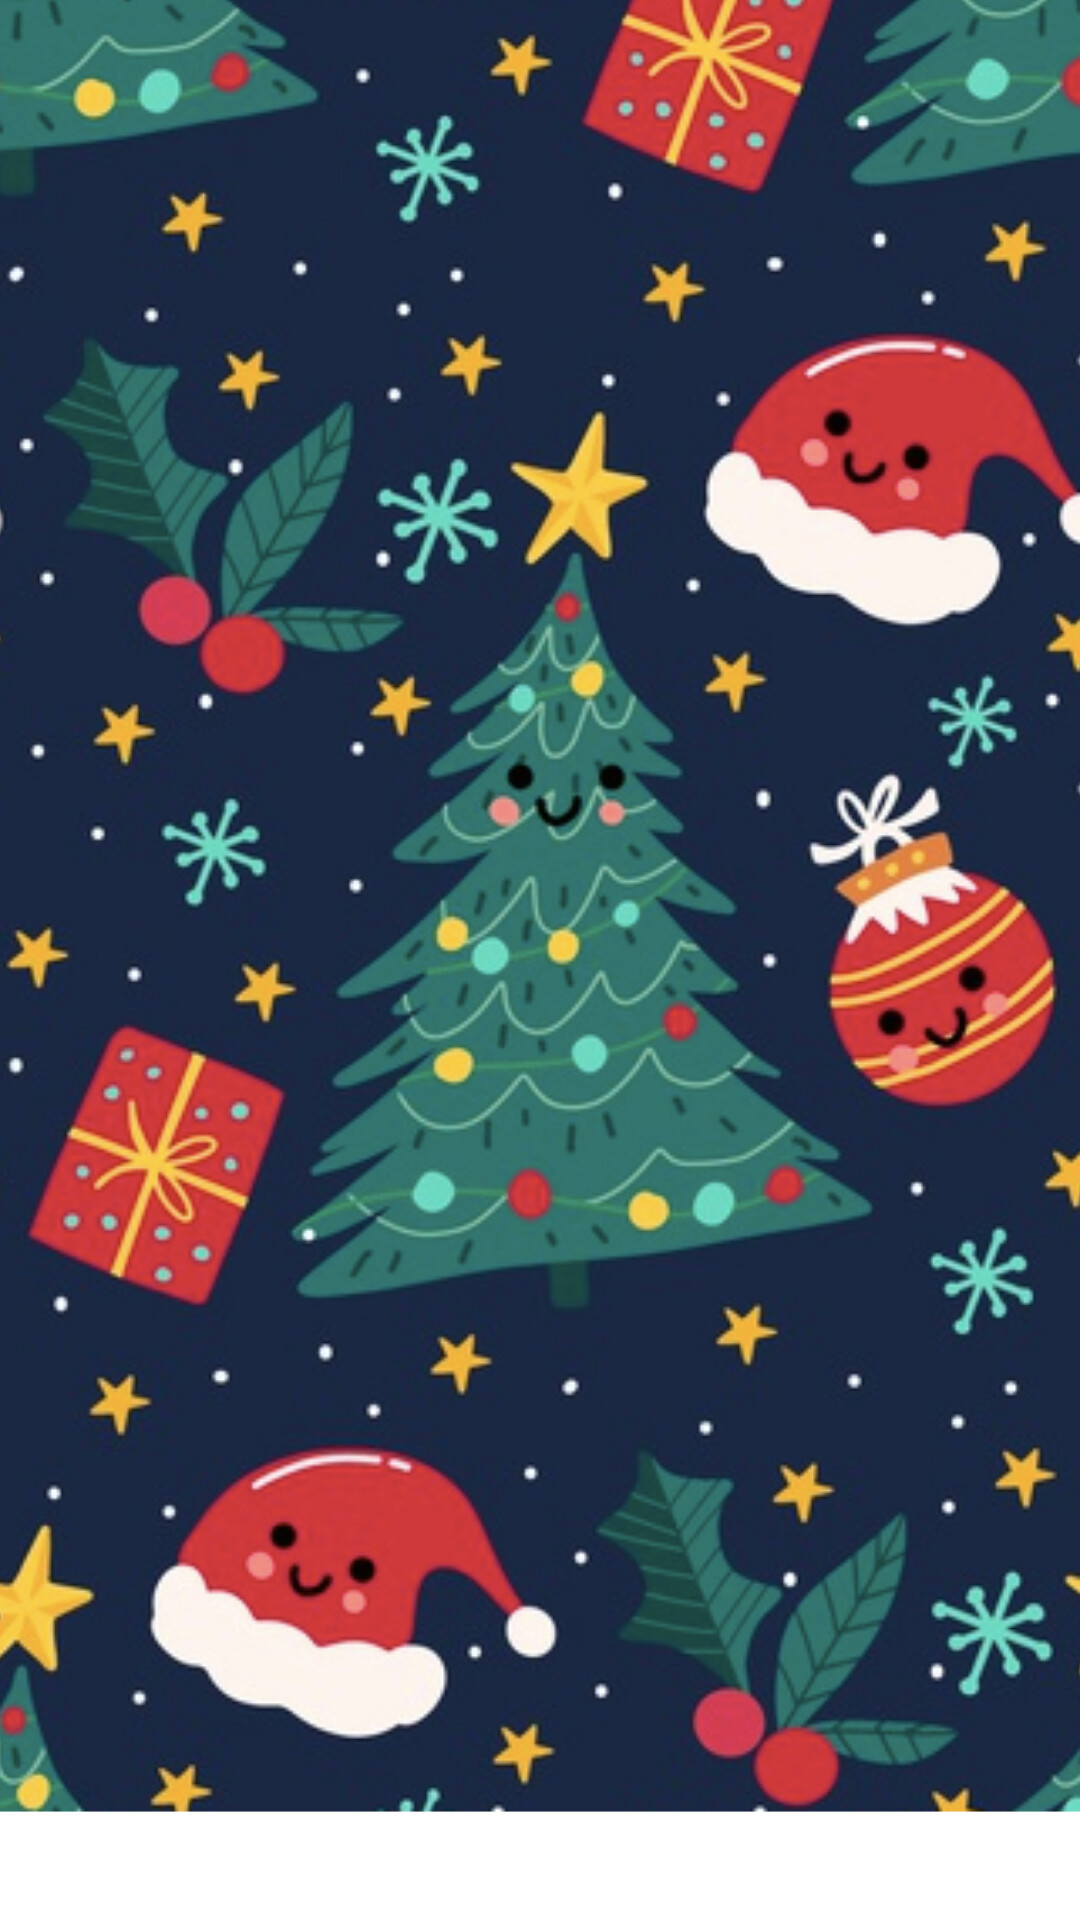 HD wallpaper, Iphone Christmas Wallpapers, 1080X1920 Full Hd Phone, Iphone Full Hd Christmas Ornament Background Photo, Free Hd Downloads, Bridal Shower Inspiration, Ornamental Beauty